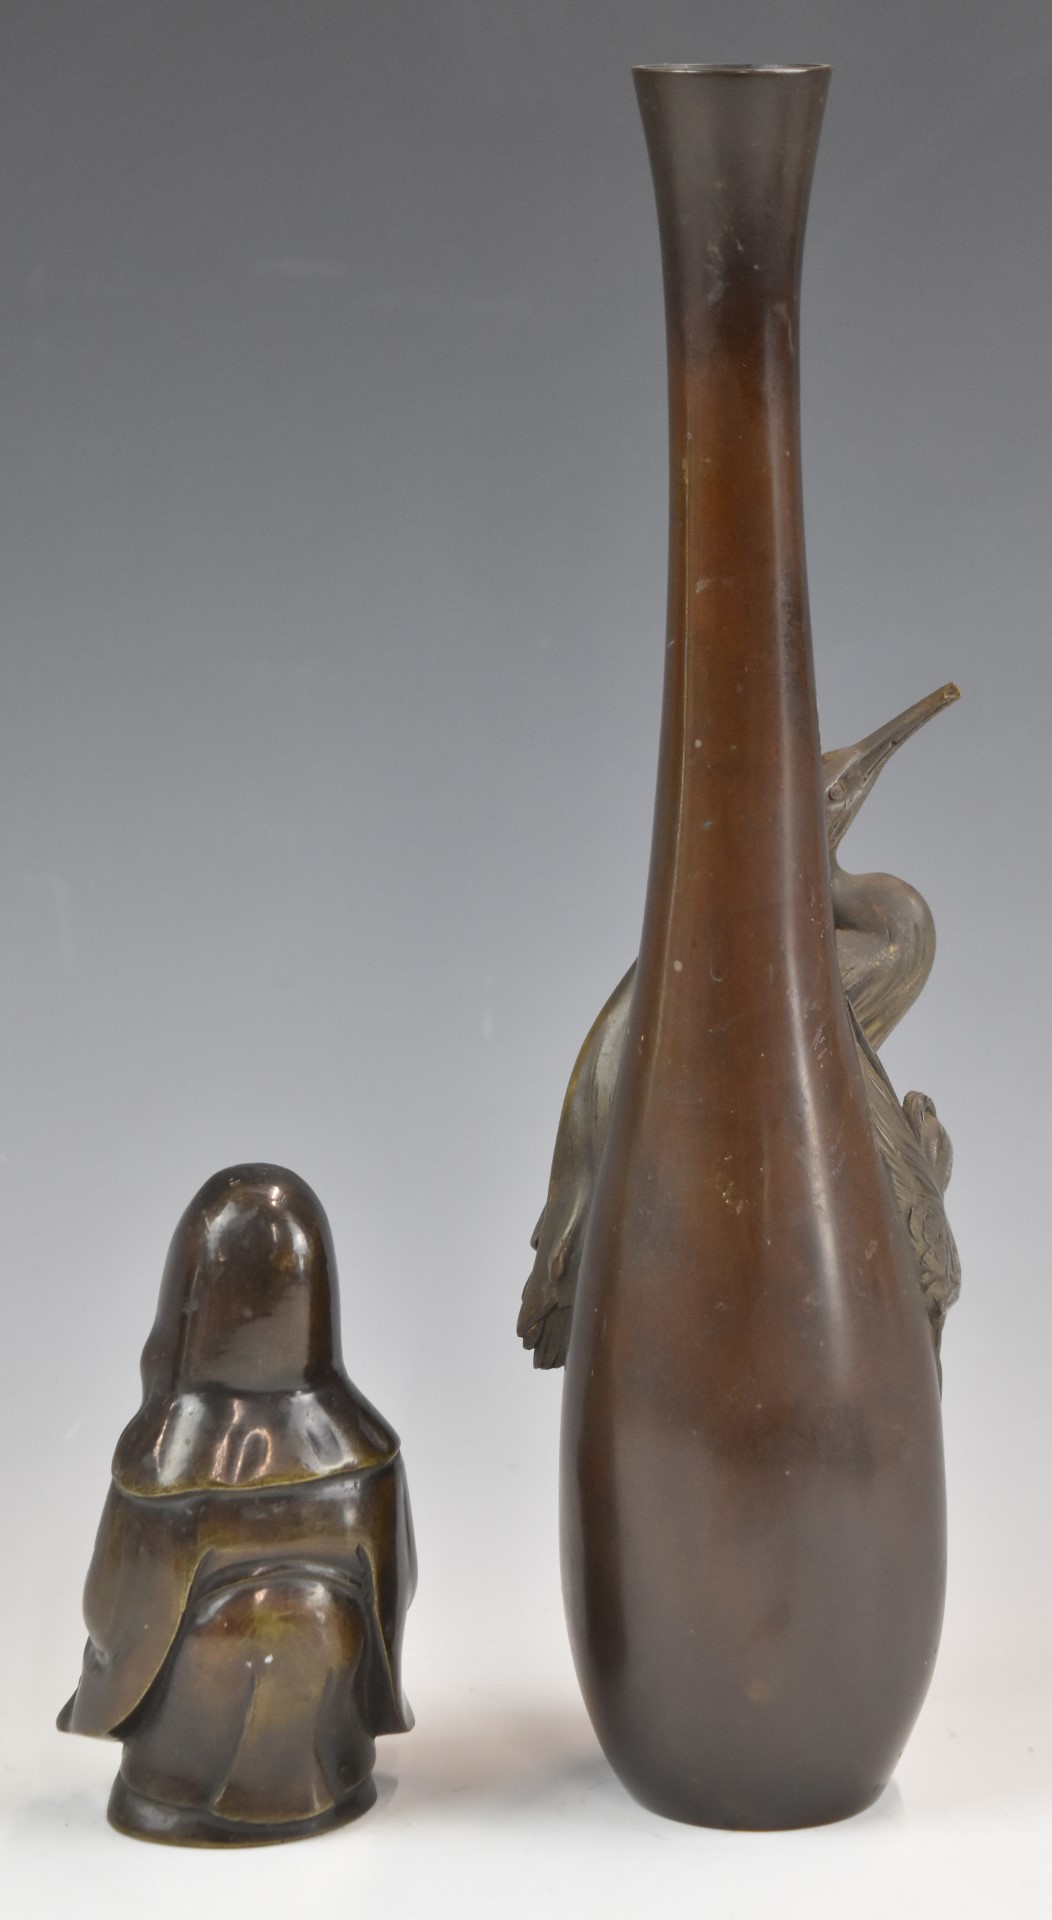 Japanese figural stork bronze vase and a Buddha, tallest 33cm - Image 2 of 2